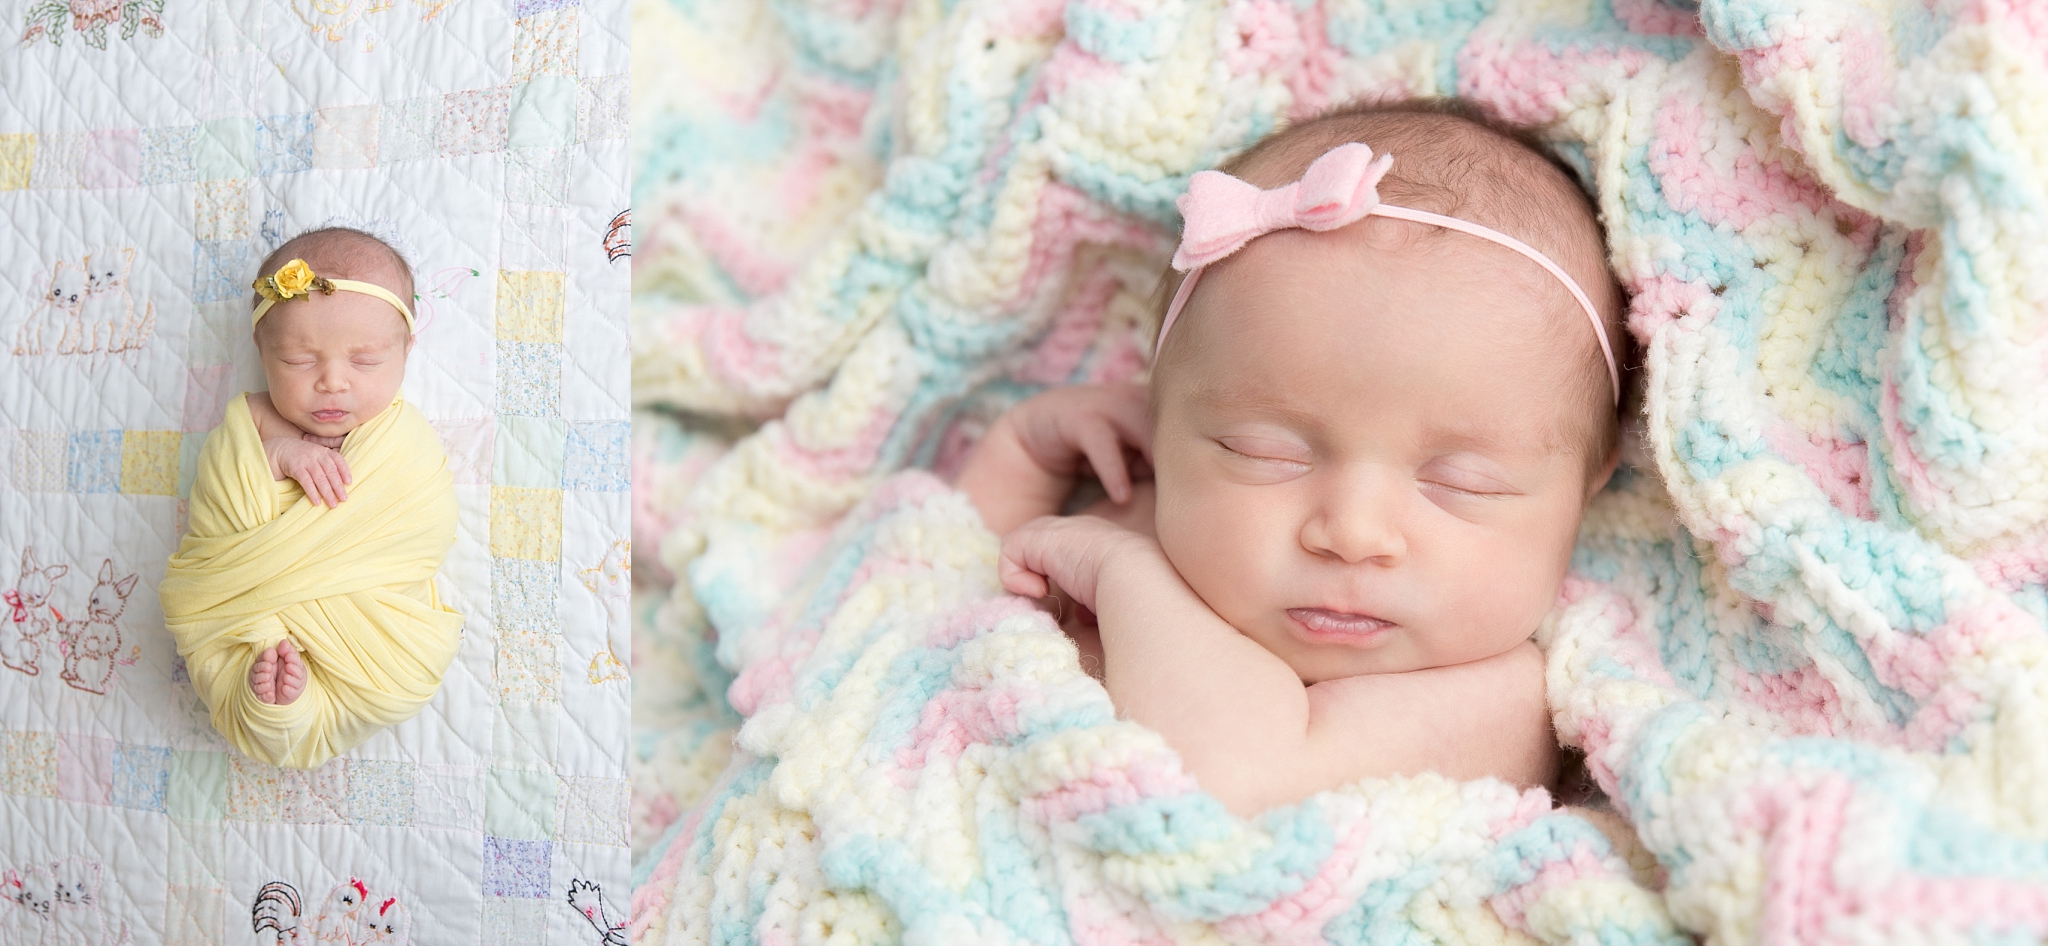 st-louis-newborn-photographer-collage-girl-on-blanket-grandma-made.jpg